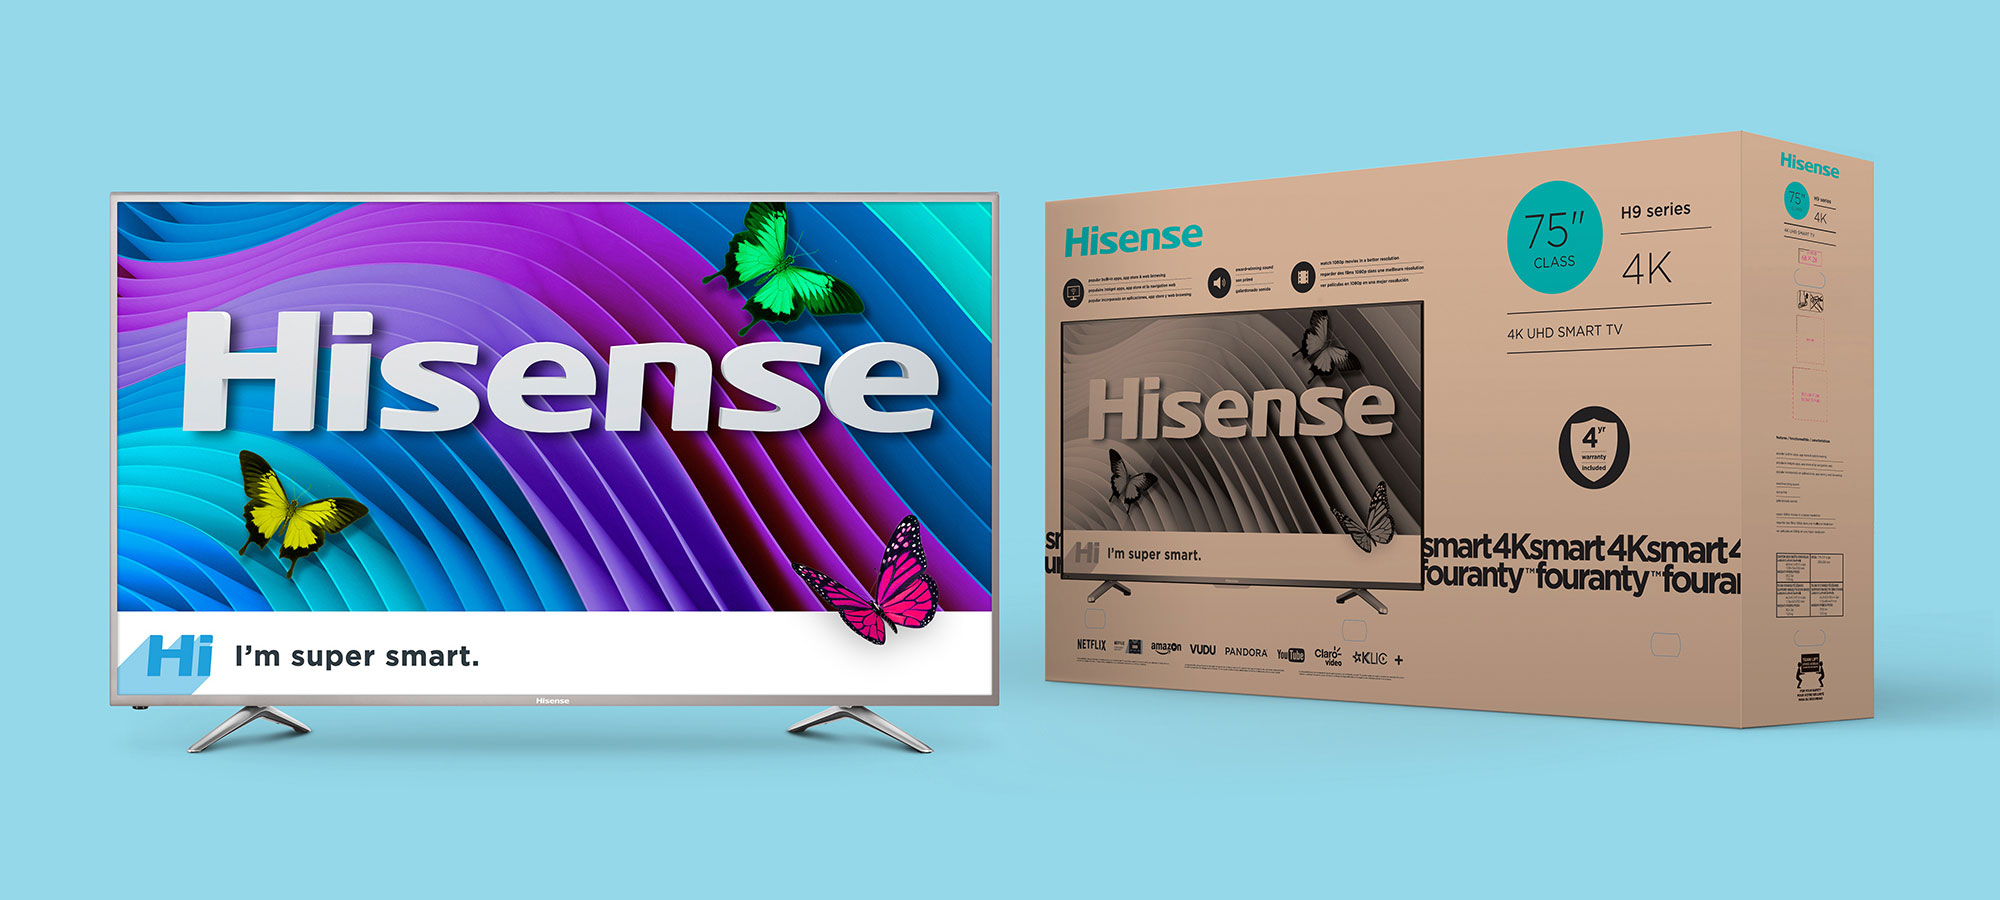 Hisense TV Packaging 2017 and inset images — Yuping Qin